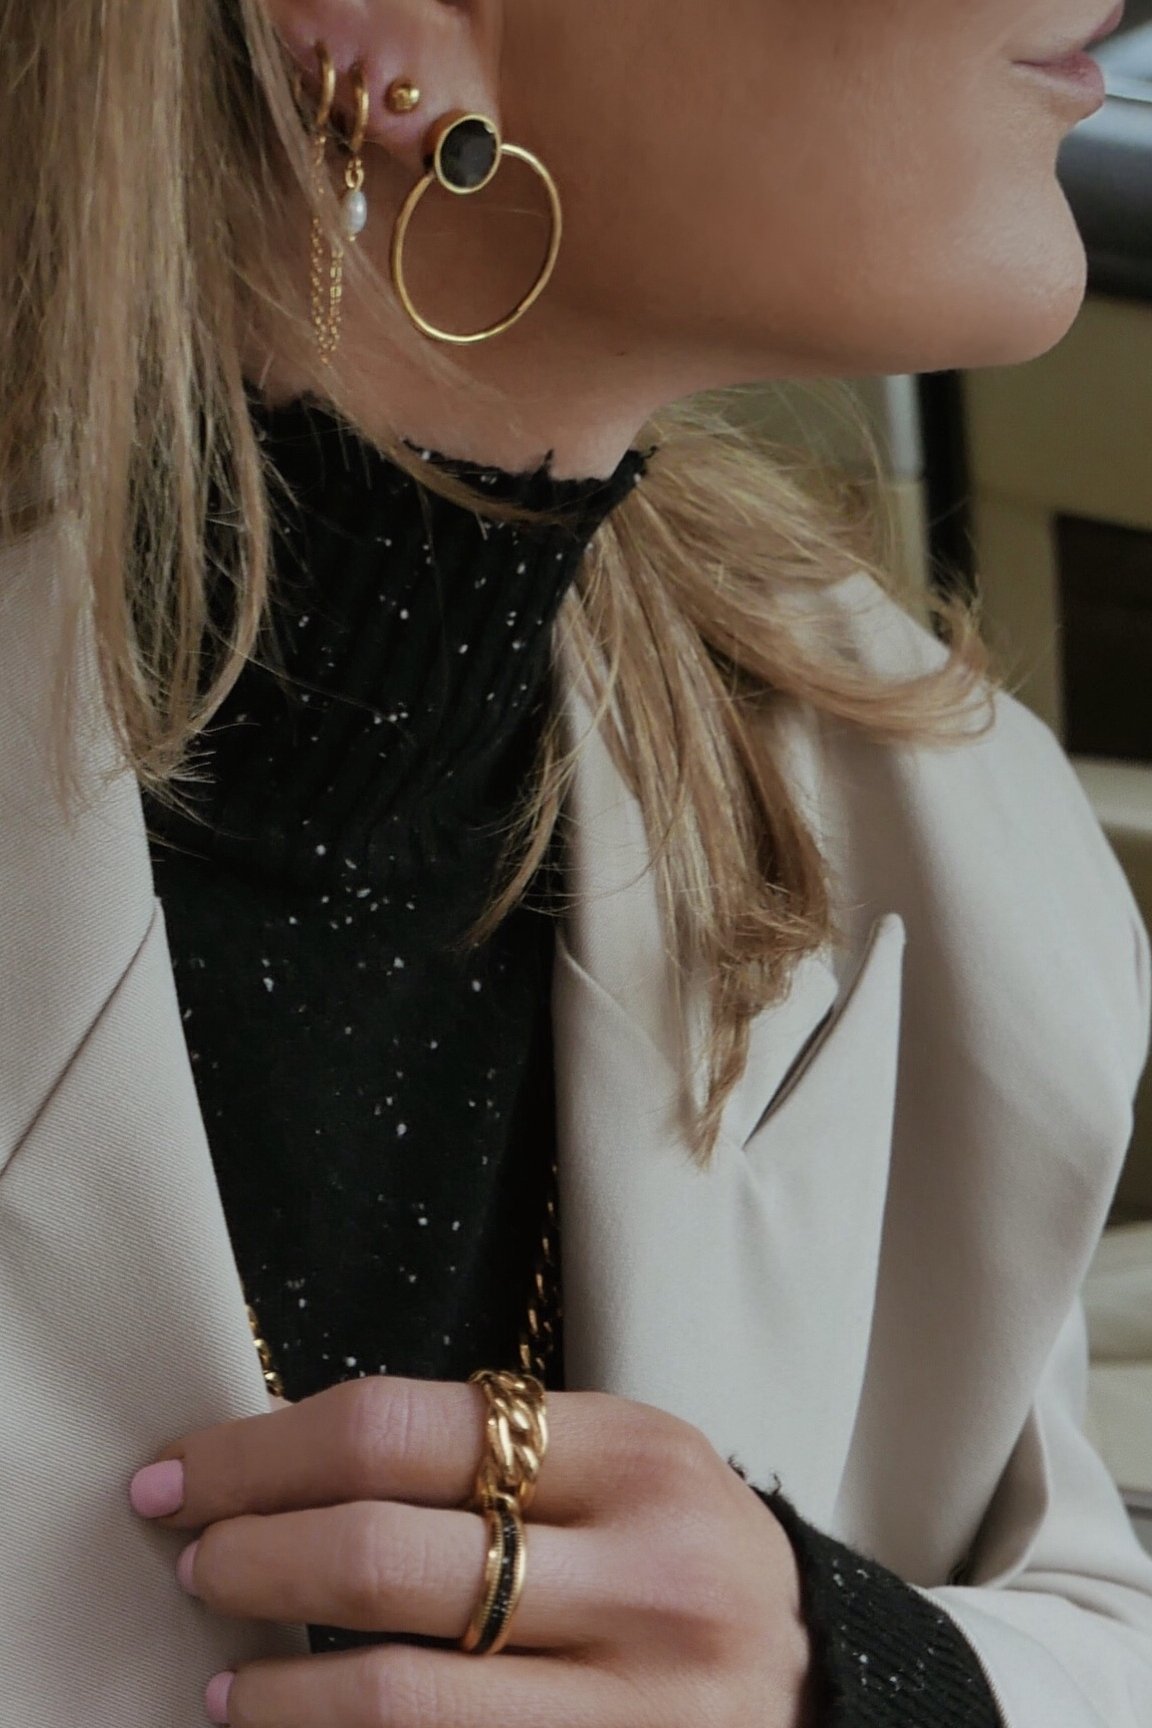 Dream Earrings - Boutique Minimaliste has waterproof, durable, elegant and vintage inspired jewelry